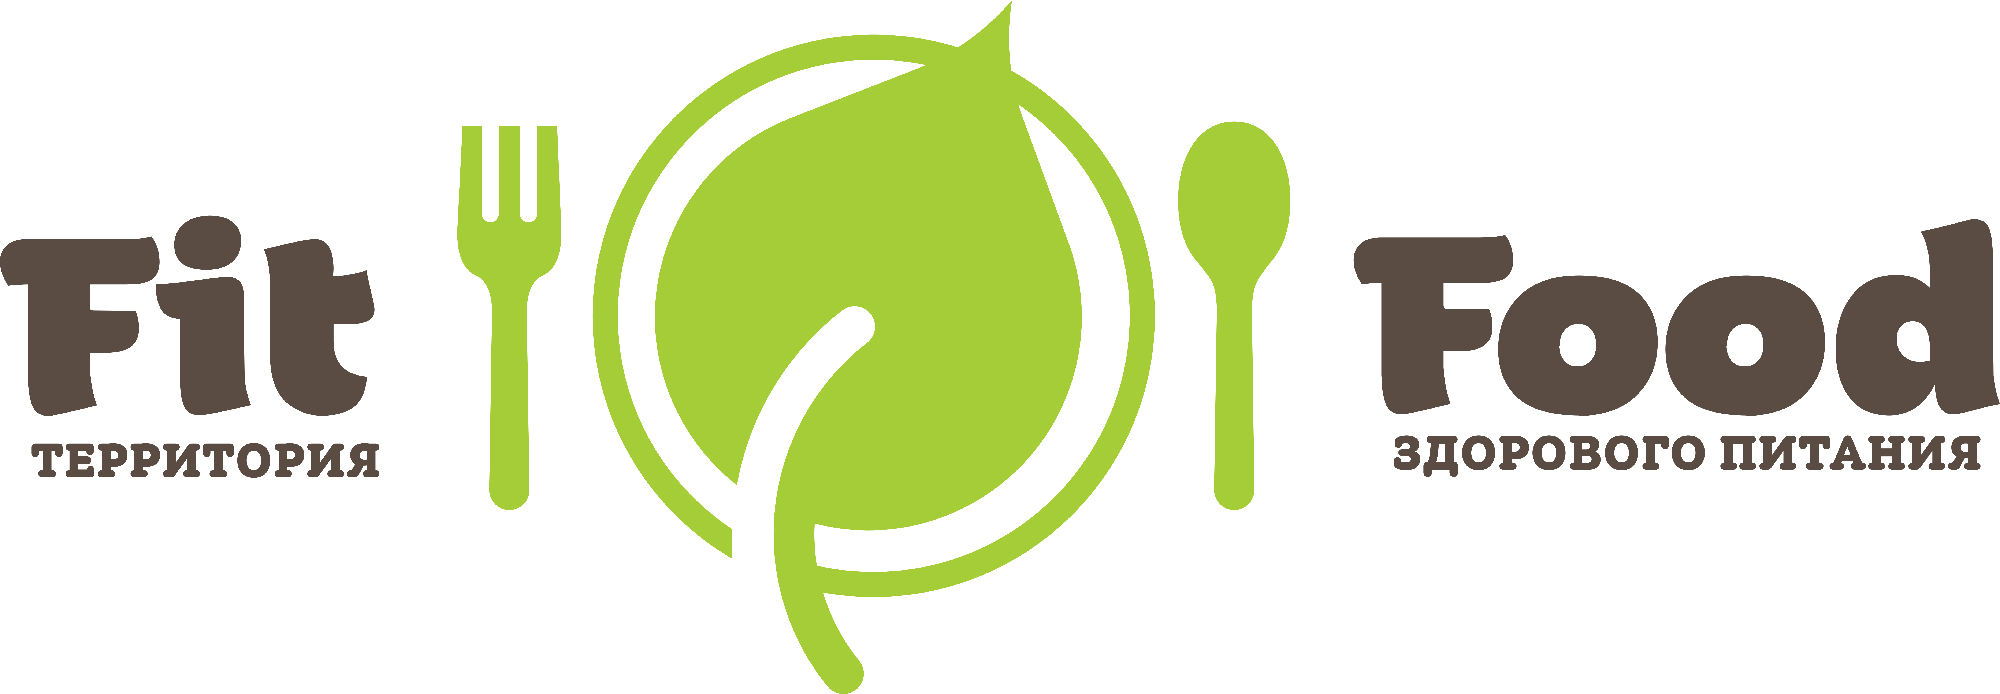 Здоровое питание эмблема. Фуд логотип. Магазин здорового питания логотип. Здоровая еда логотип. Интернет магазин фуд